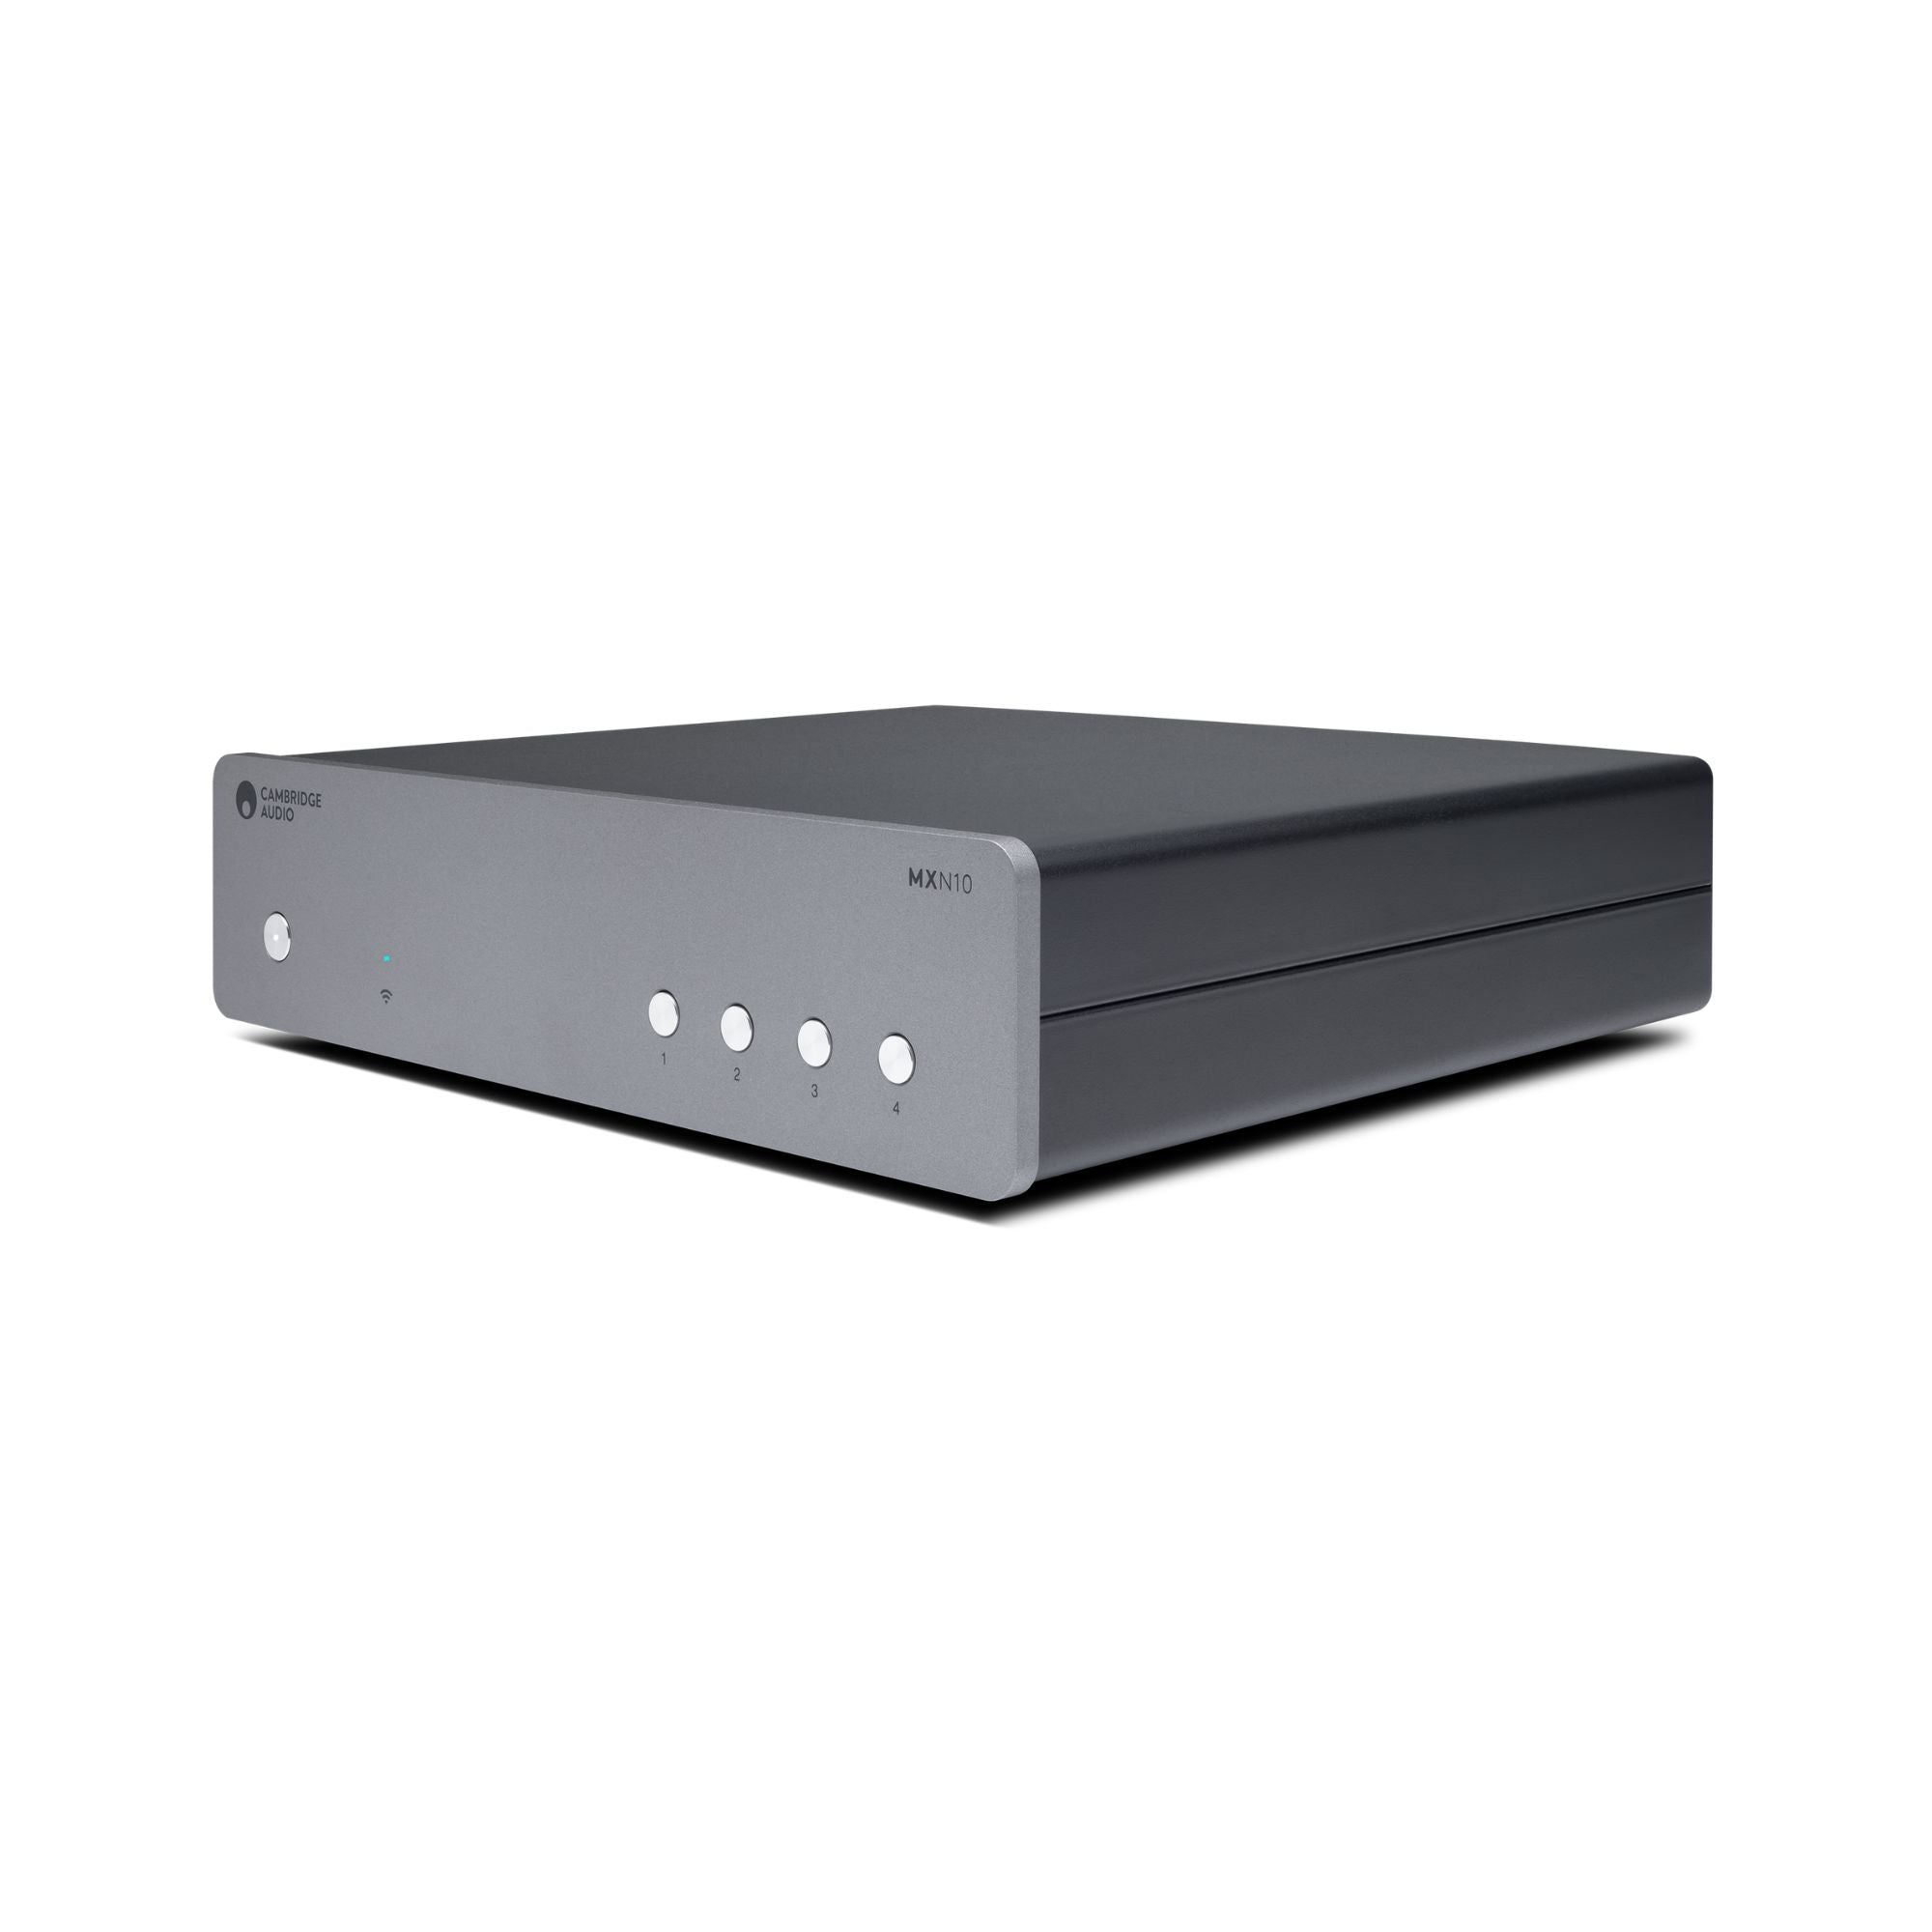 Cambridge Audio MXN10 - Network Player, Cambridge Audio, Network Player - AVStore.in